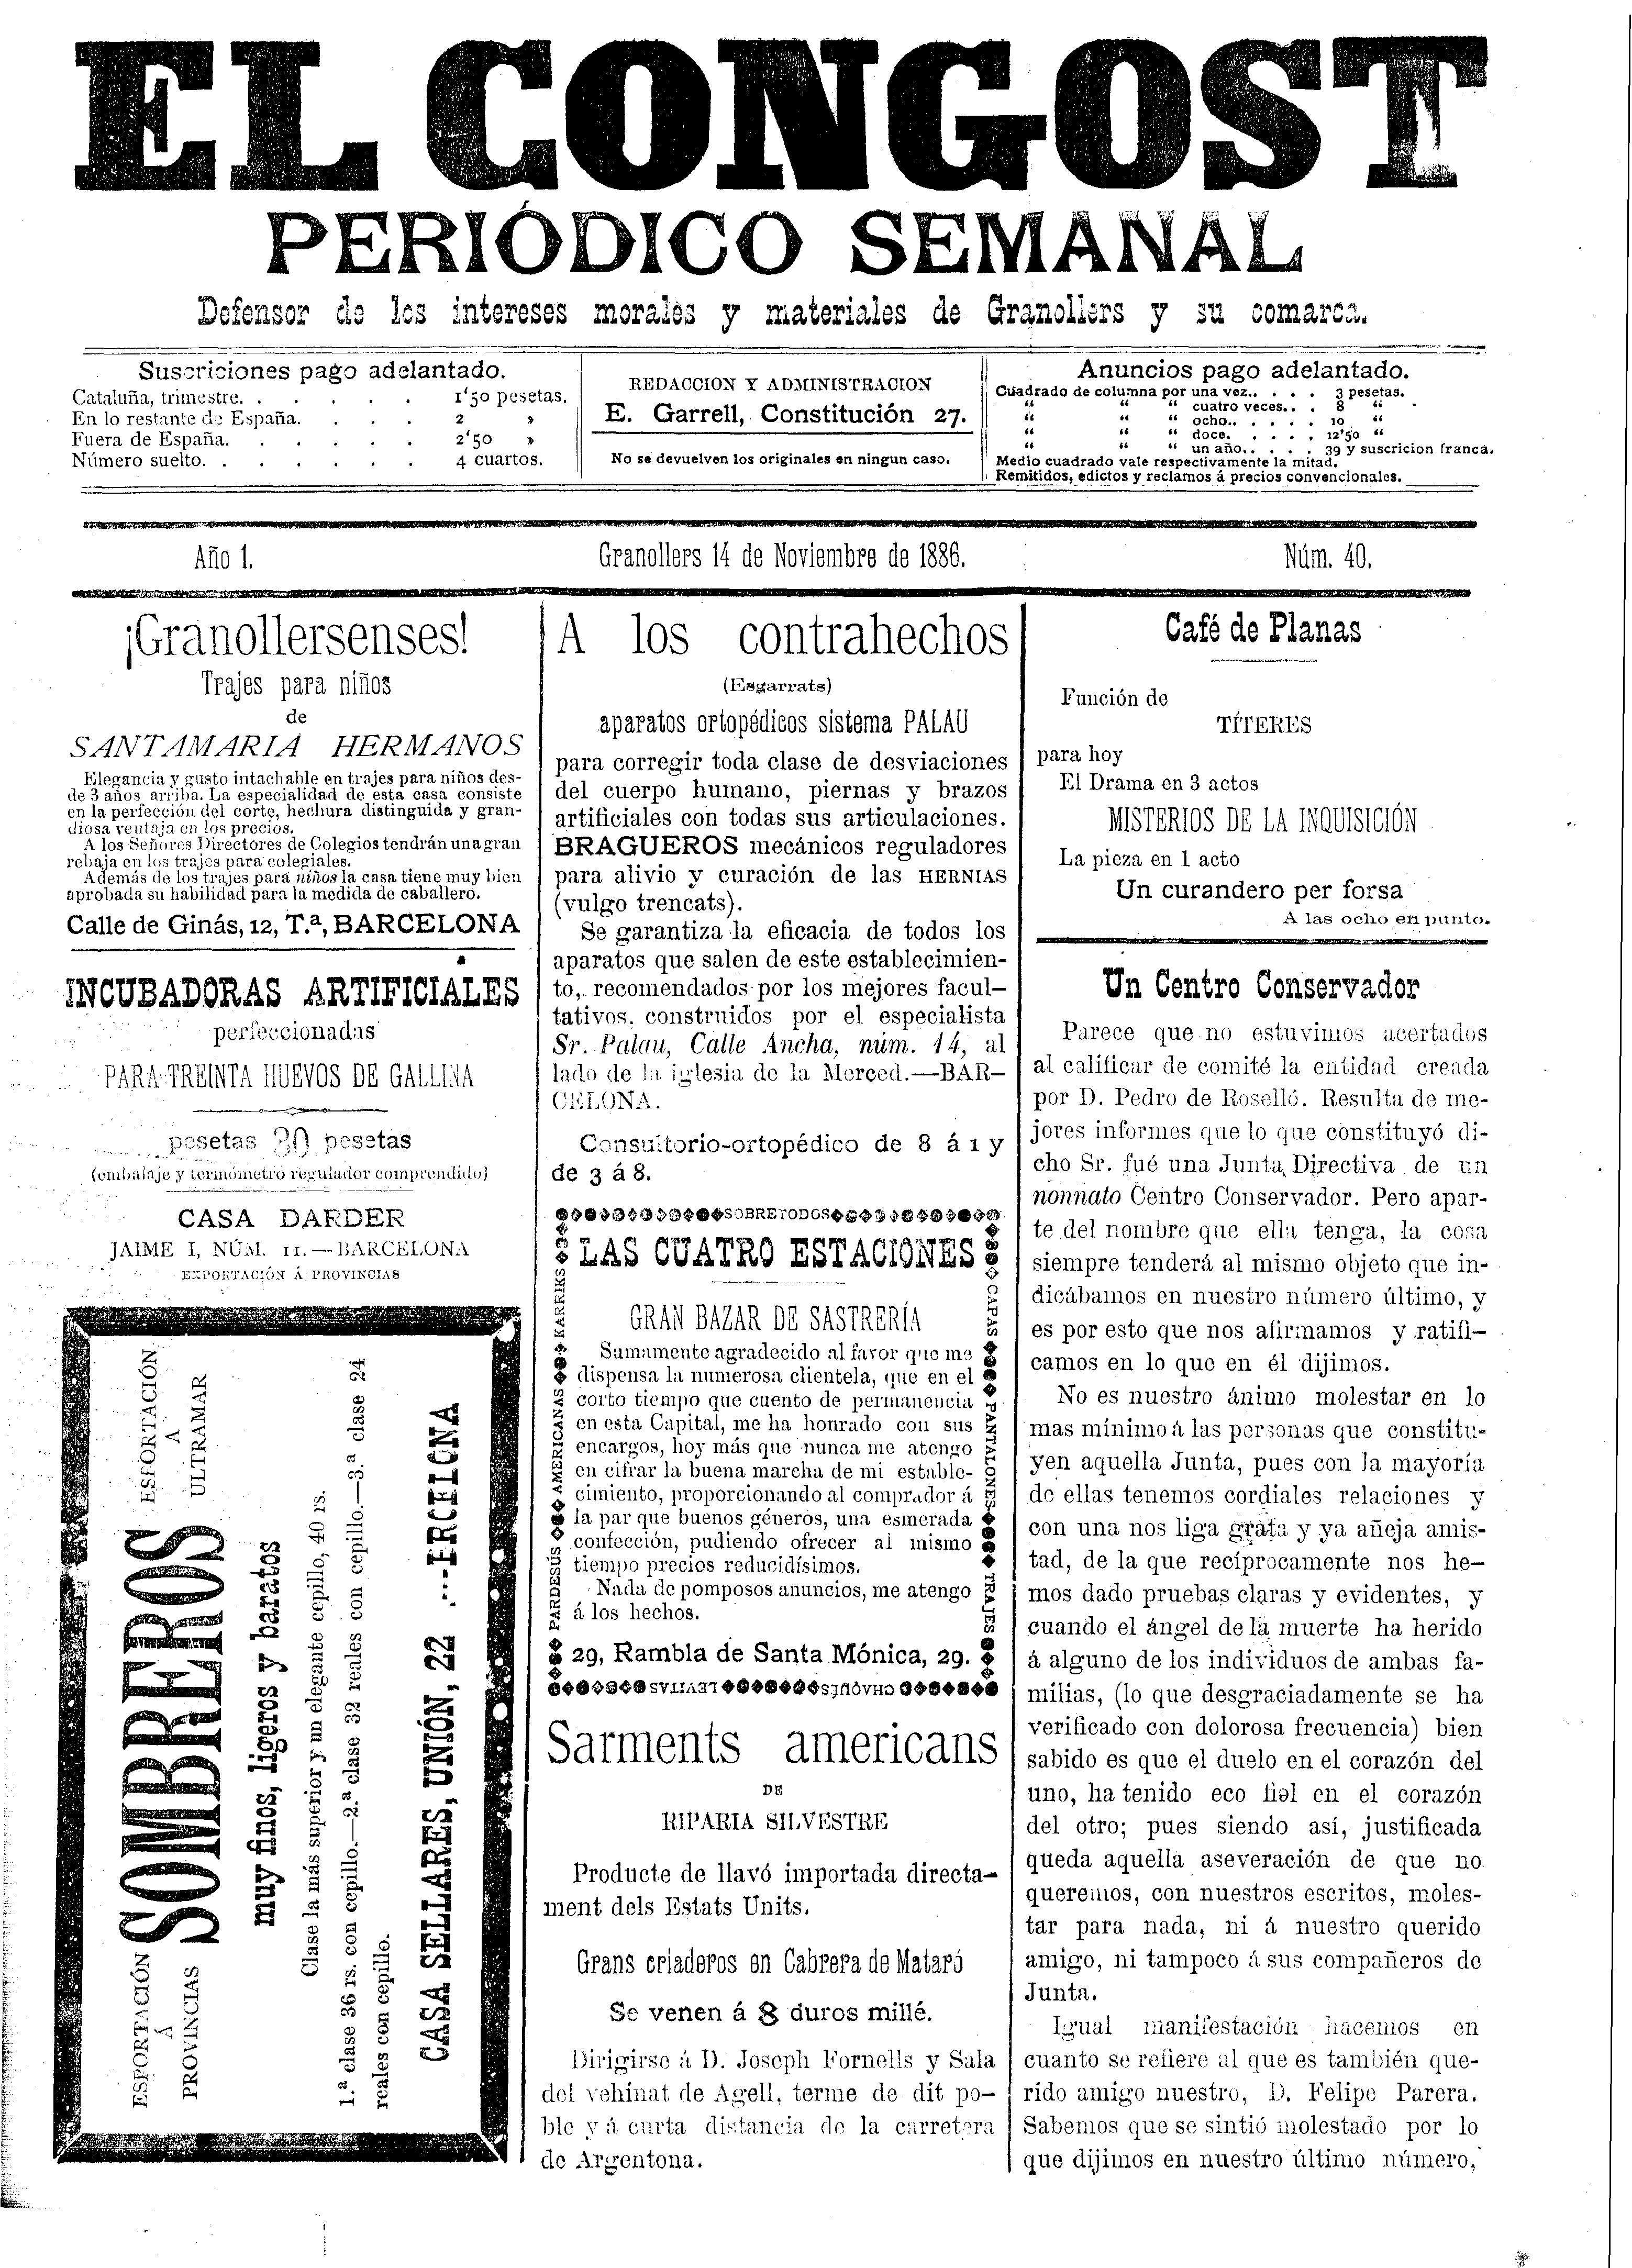 El Congost, 14/11/1886 [Ejemplar]